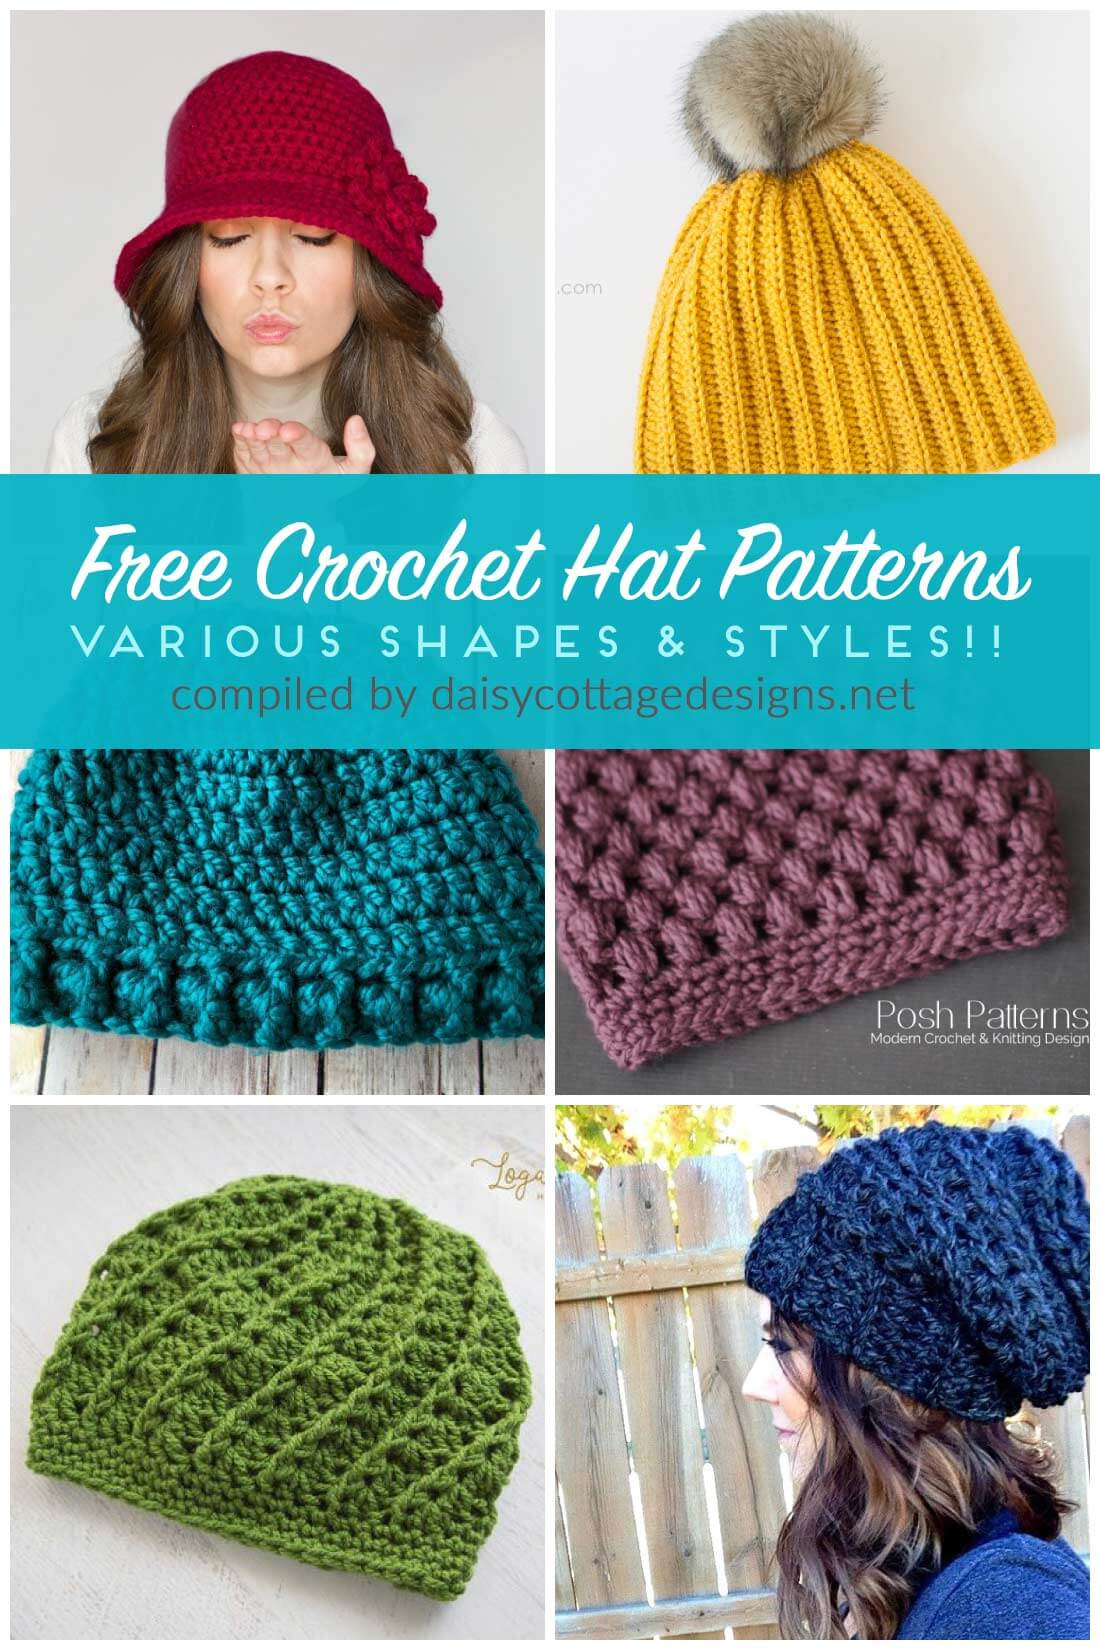 Adult Crochet Beanie Pattern Free Crochet Hat Patterns Daisy Cottage Designs